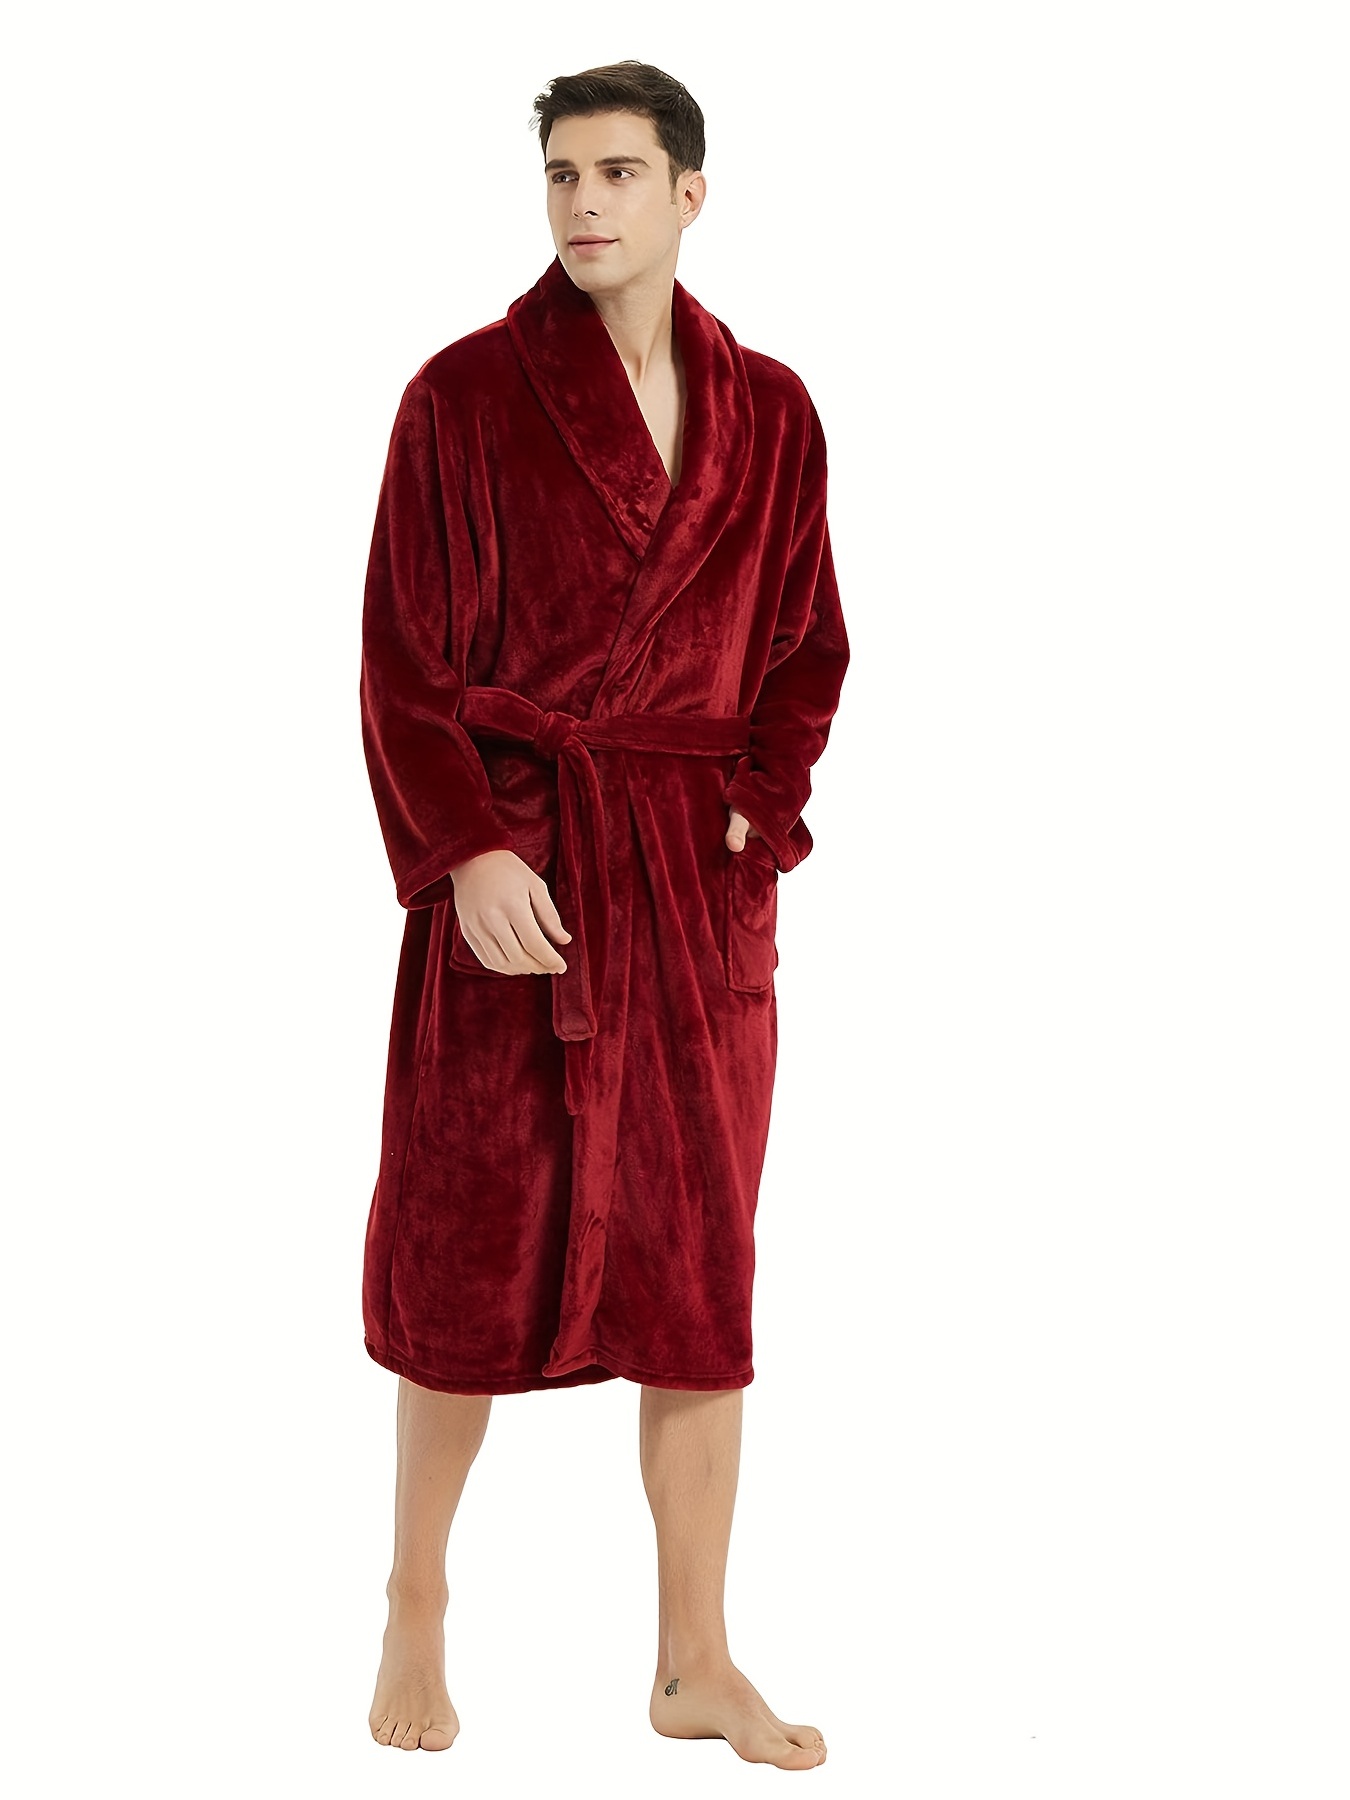 Coral Fleece Pajamas Men's Winter Thickened Plus Velvet Warm